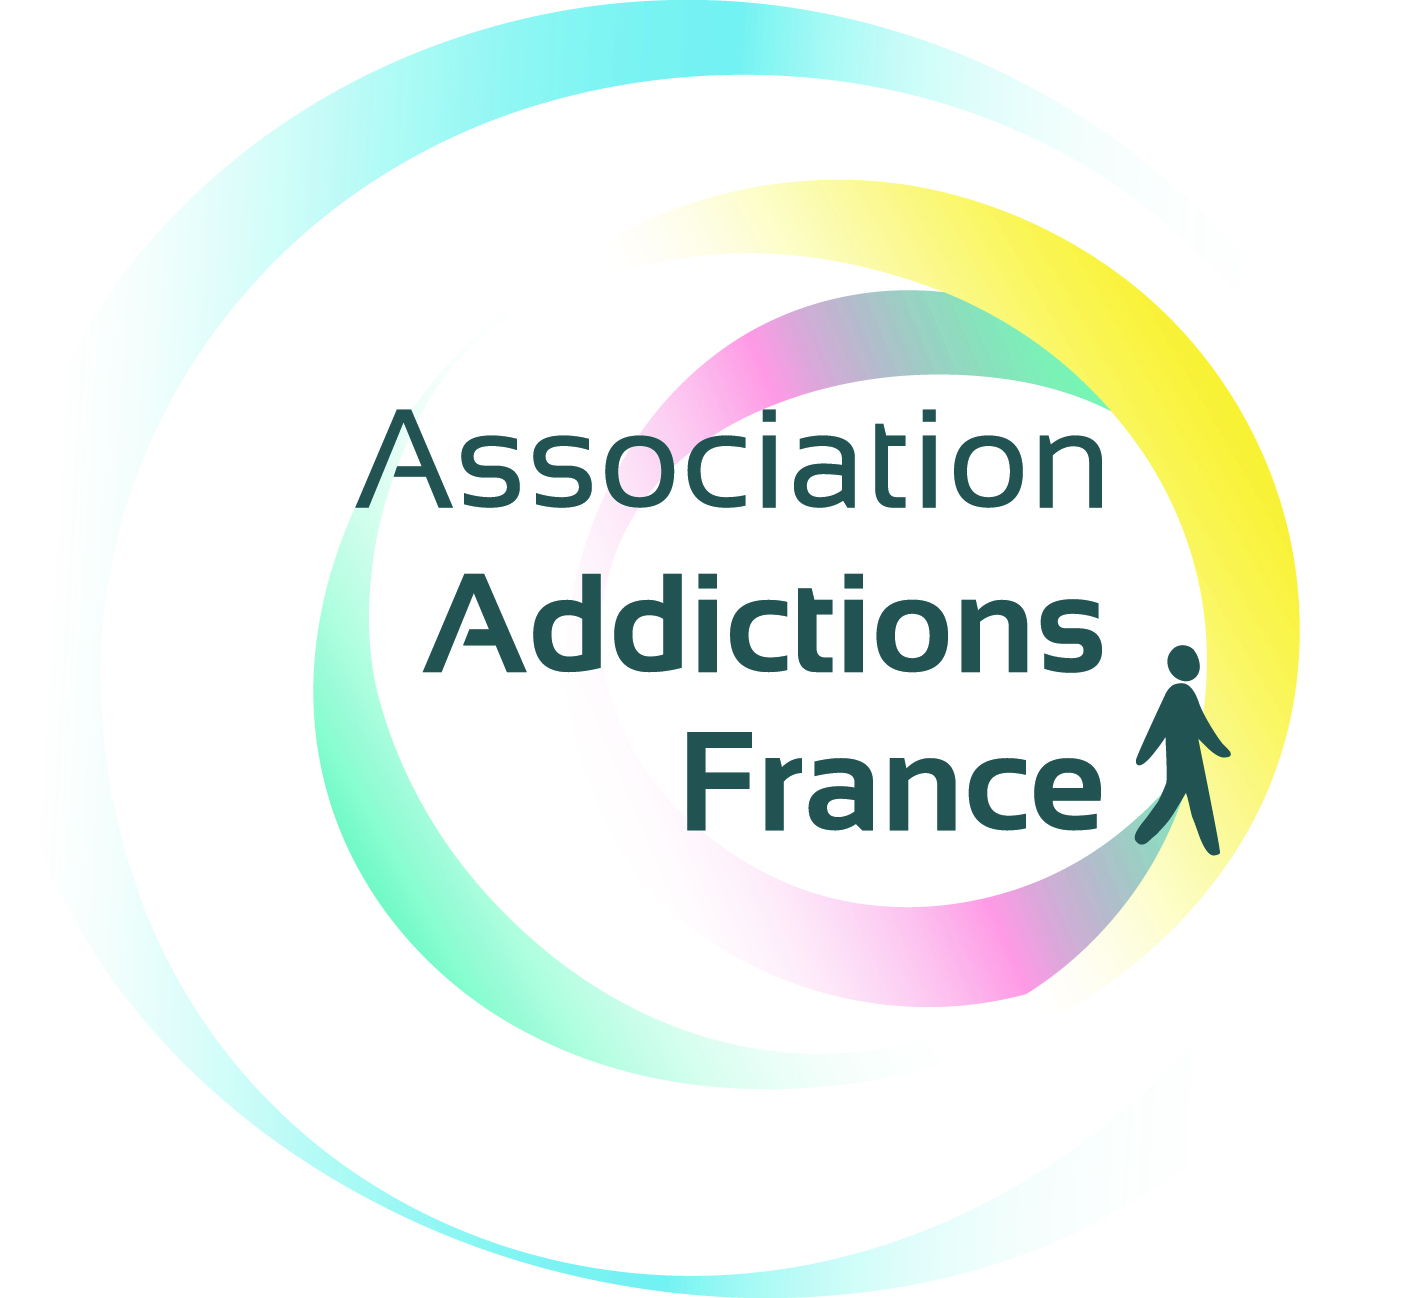 logo Addictions France (ex ANPAA)